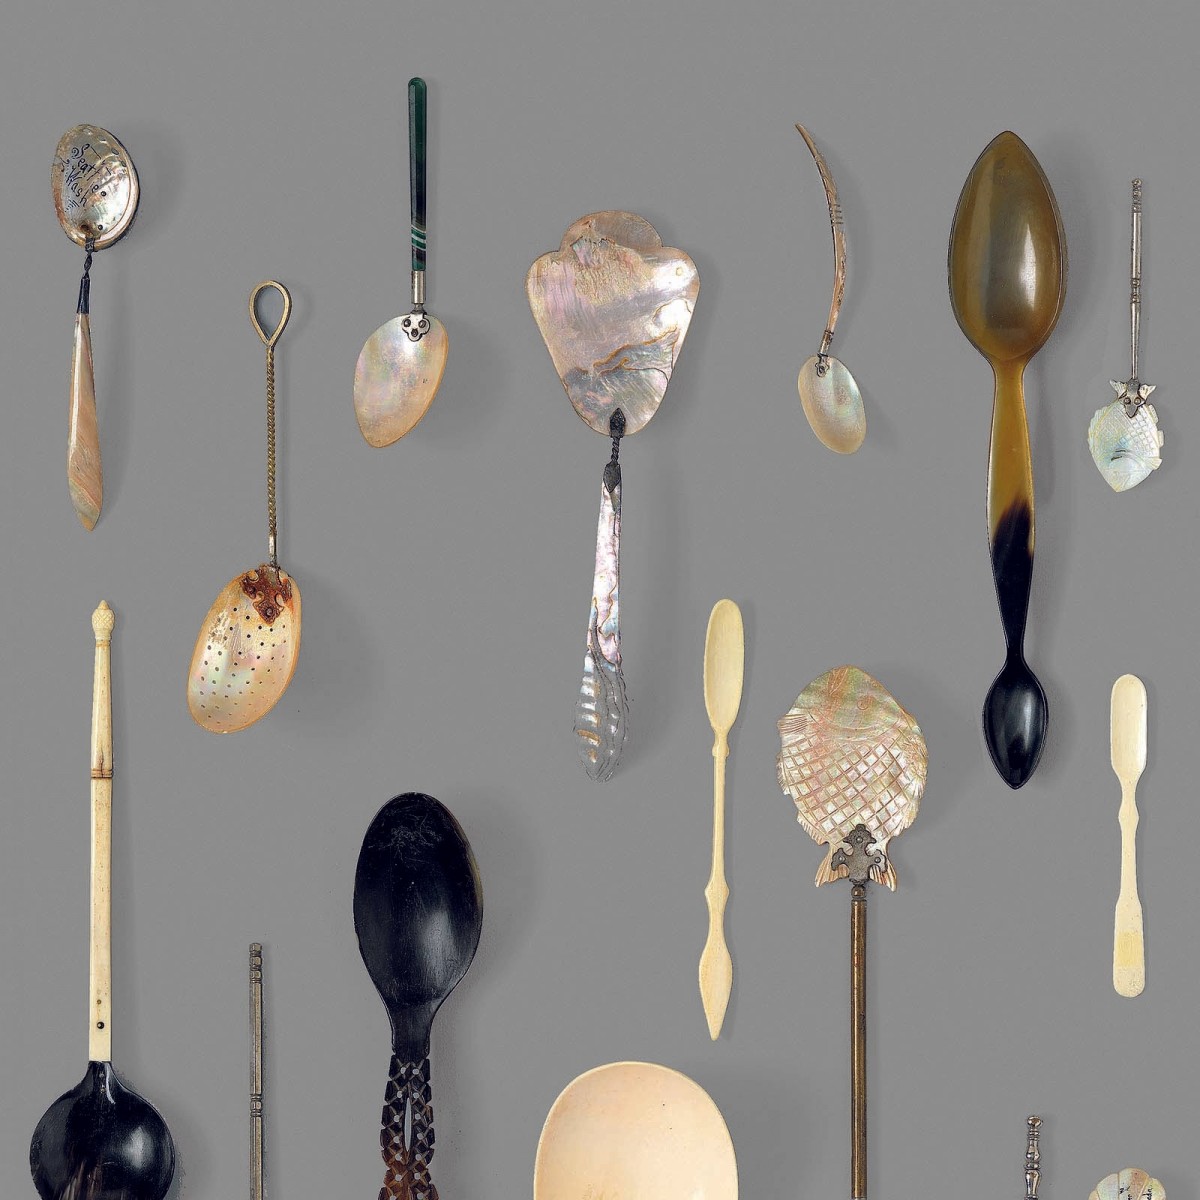 Tapet designer Obsession Spoons by Daniel Rozensztroch, NLXL, 4.9mp / rola, Tapet Exclusivist 